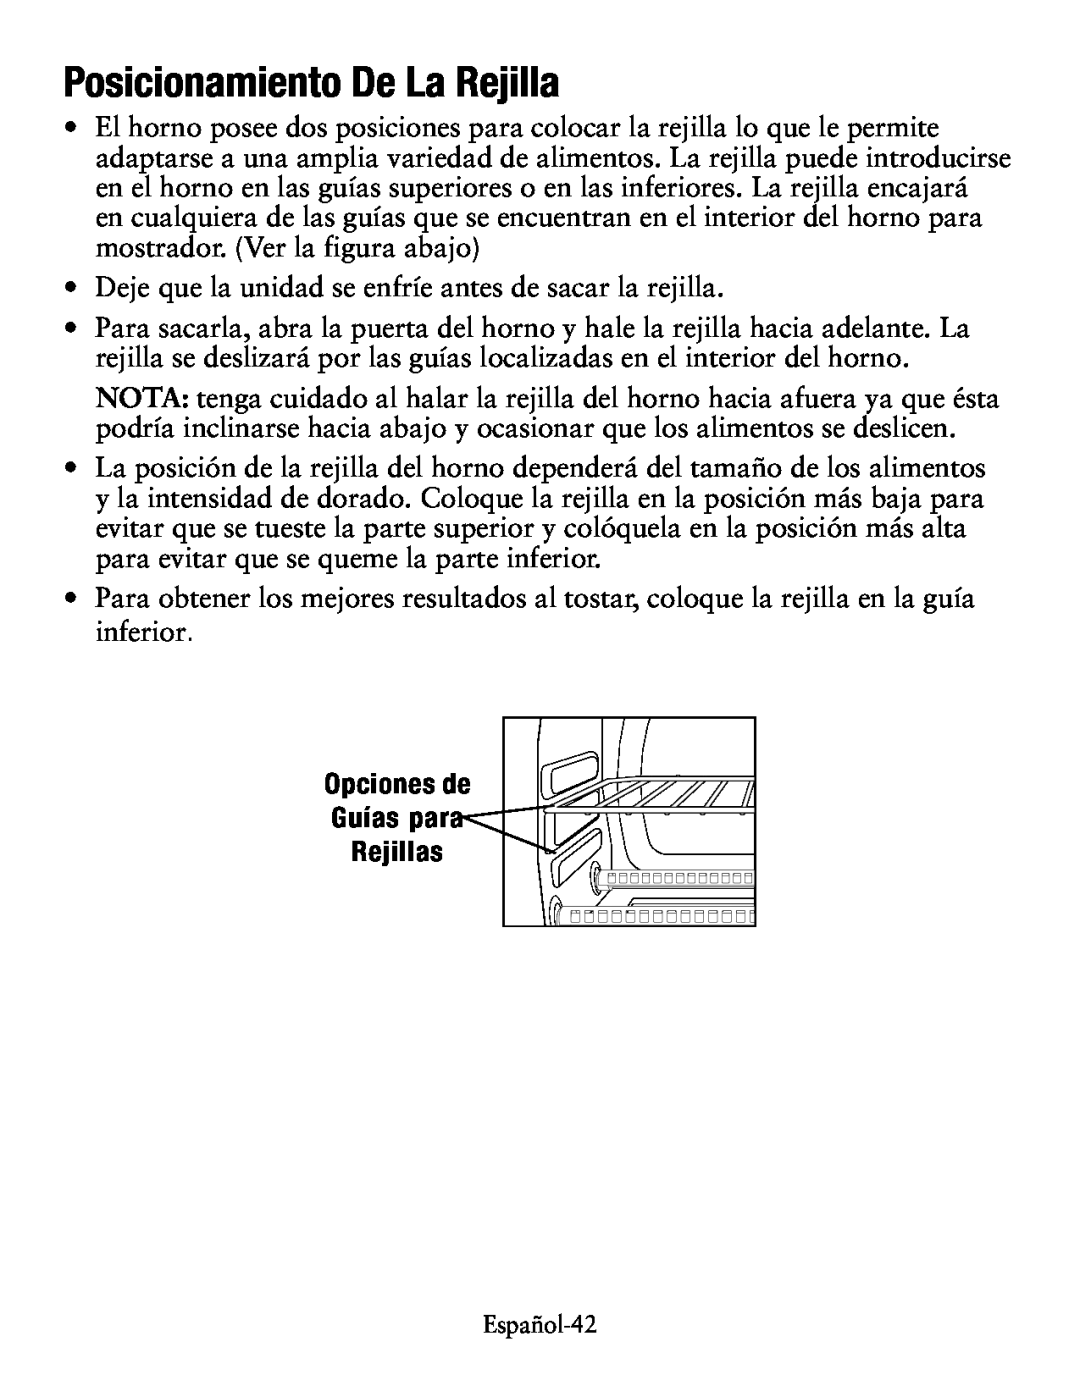 Oster TSSTTVDG01, Digital Countertop Oven user manual Posicionamiento De La Rejilla 